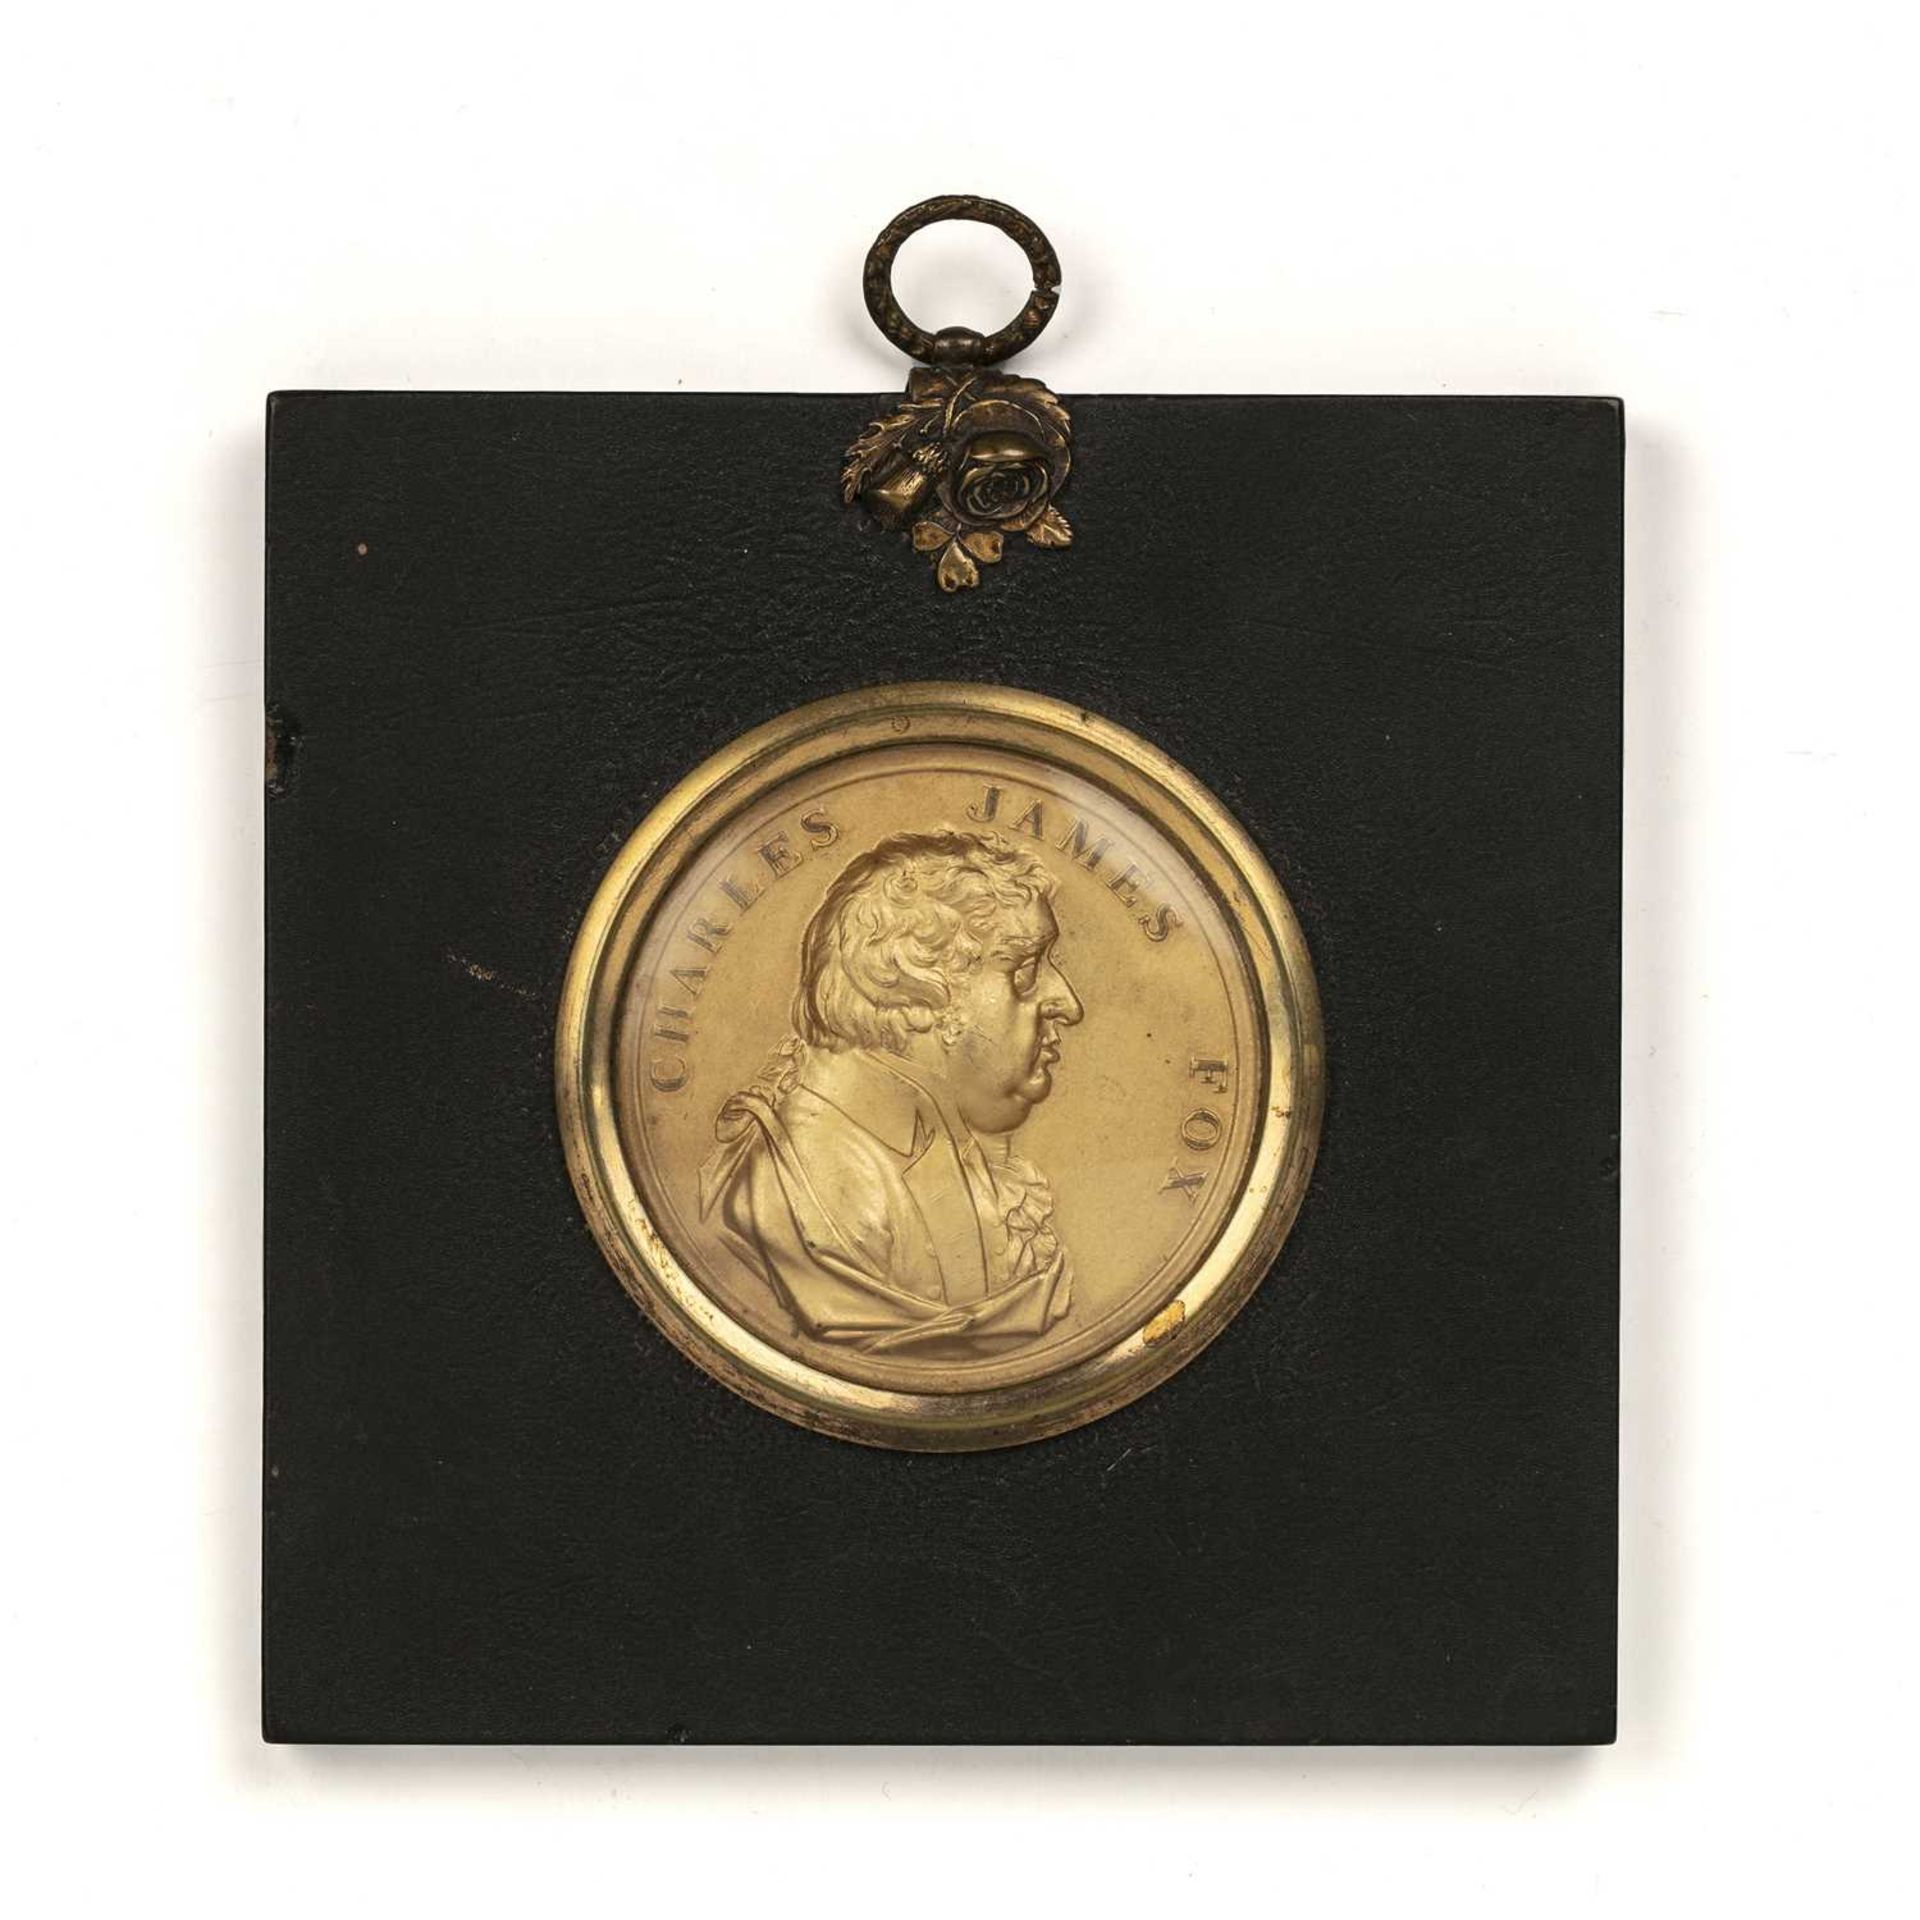 Portrait medal of Charles James Fox in an ebonised frame, the medal is 5cm diameter Provenance: